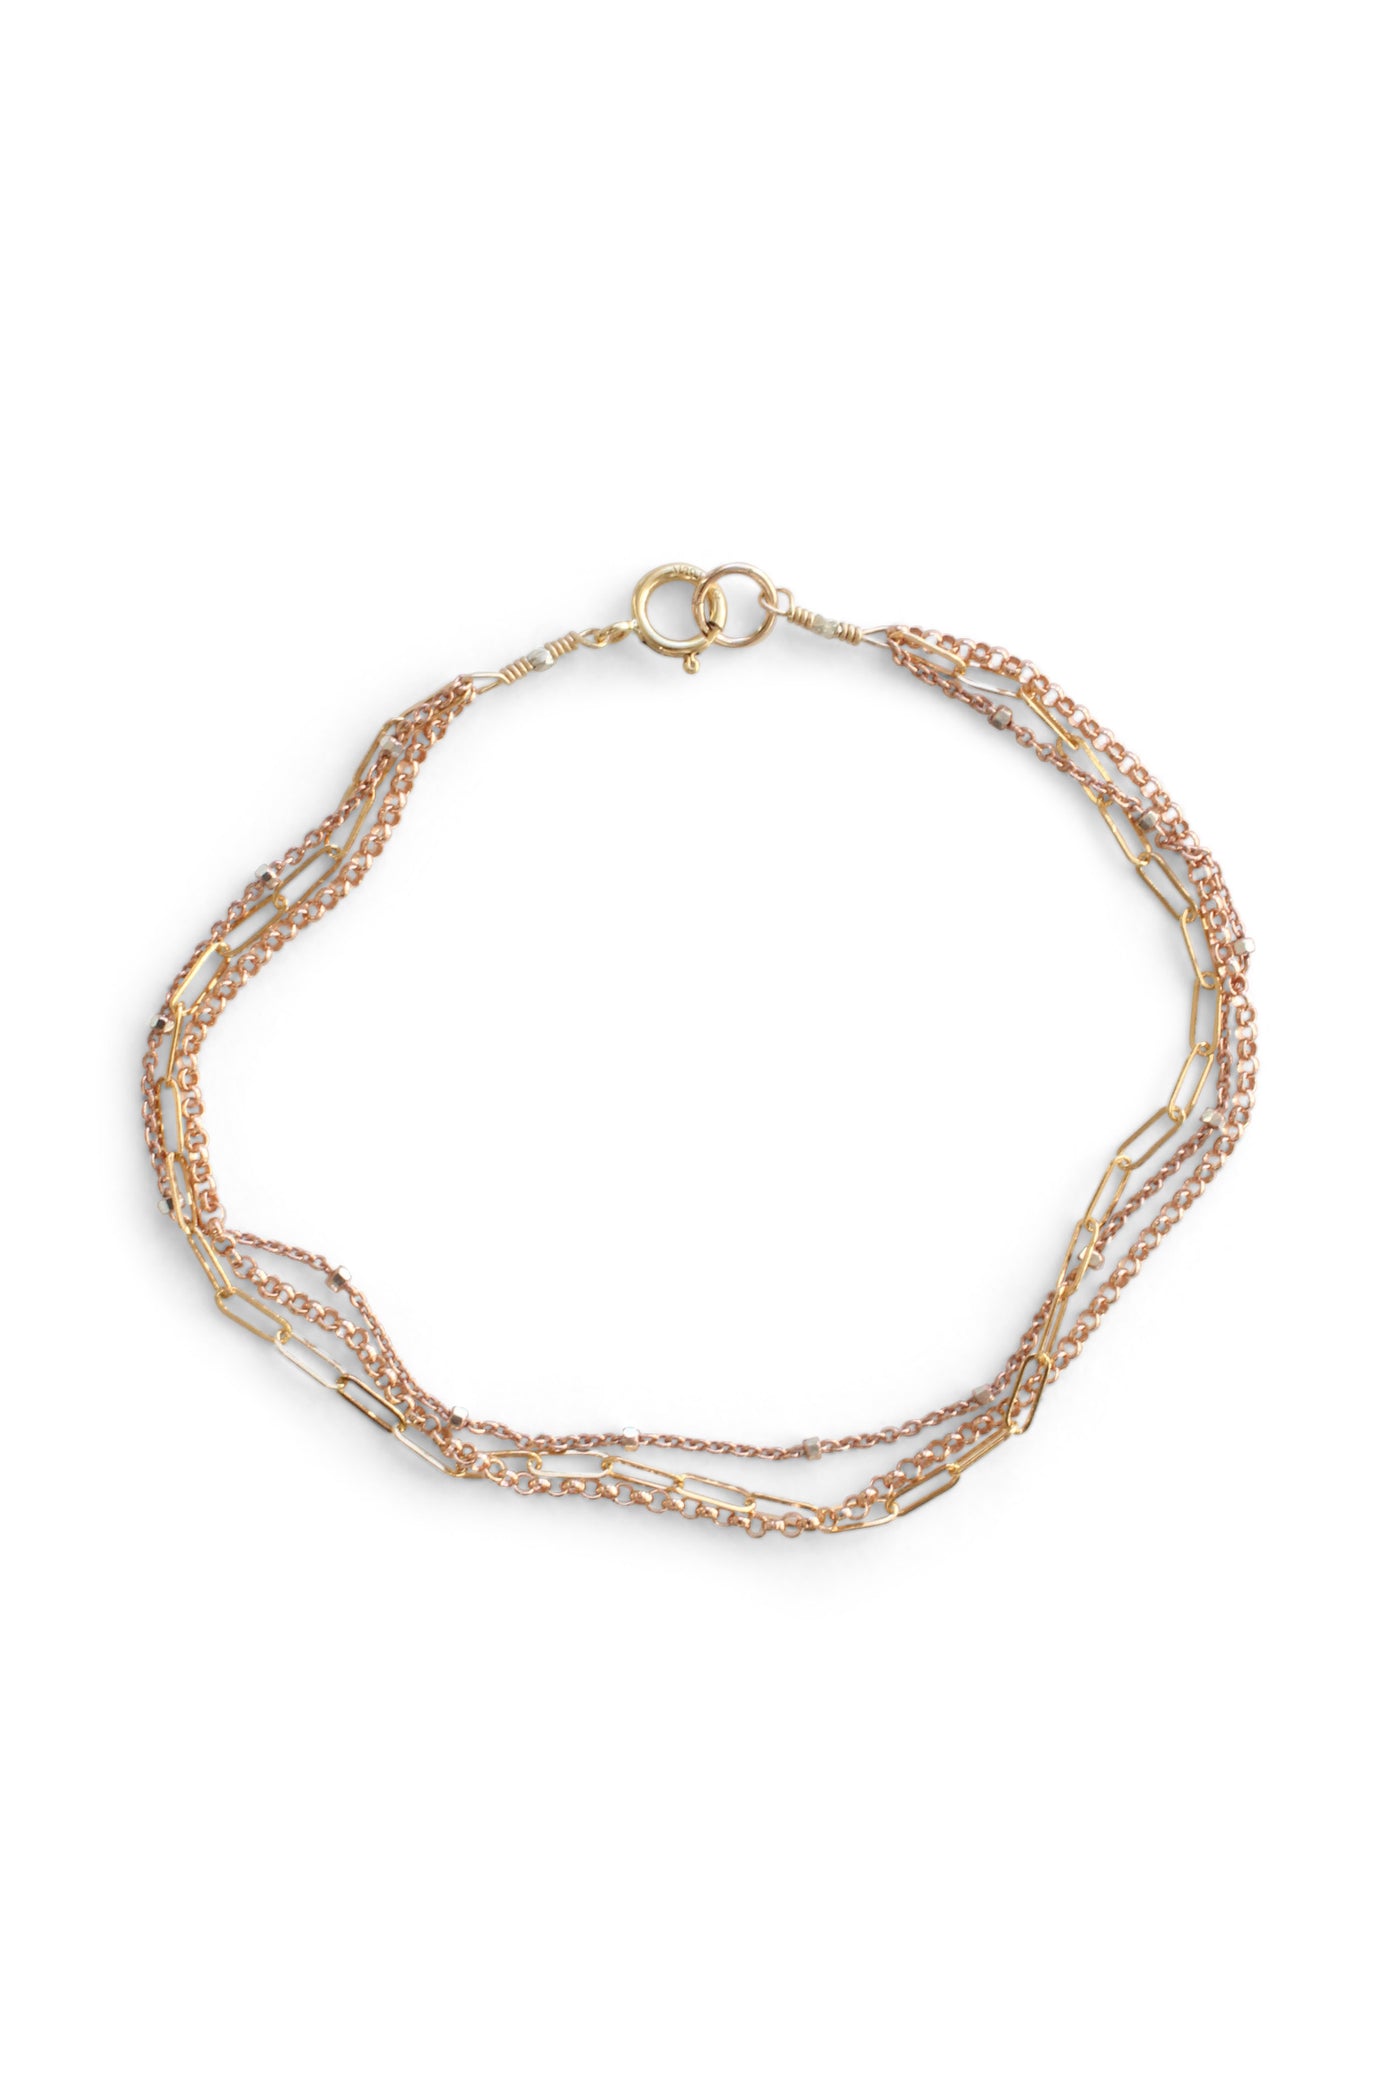 Delicate Triple Strand Bracelet | Mixed Metal Bracelet | REBECCA SCOTT JEWELRY | Handmade Jewelry | Feminine Jewelry